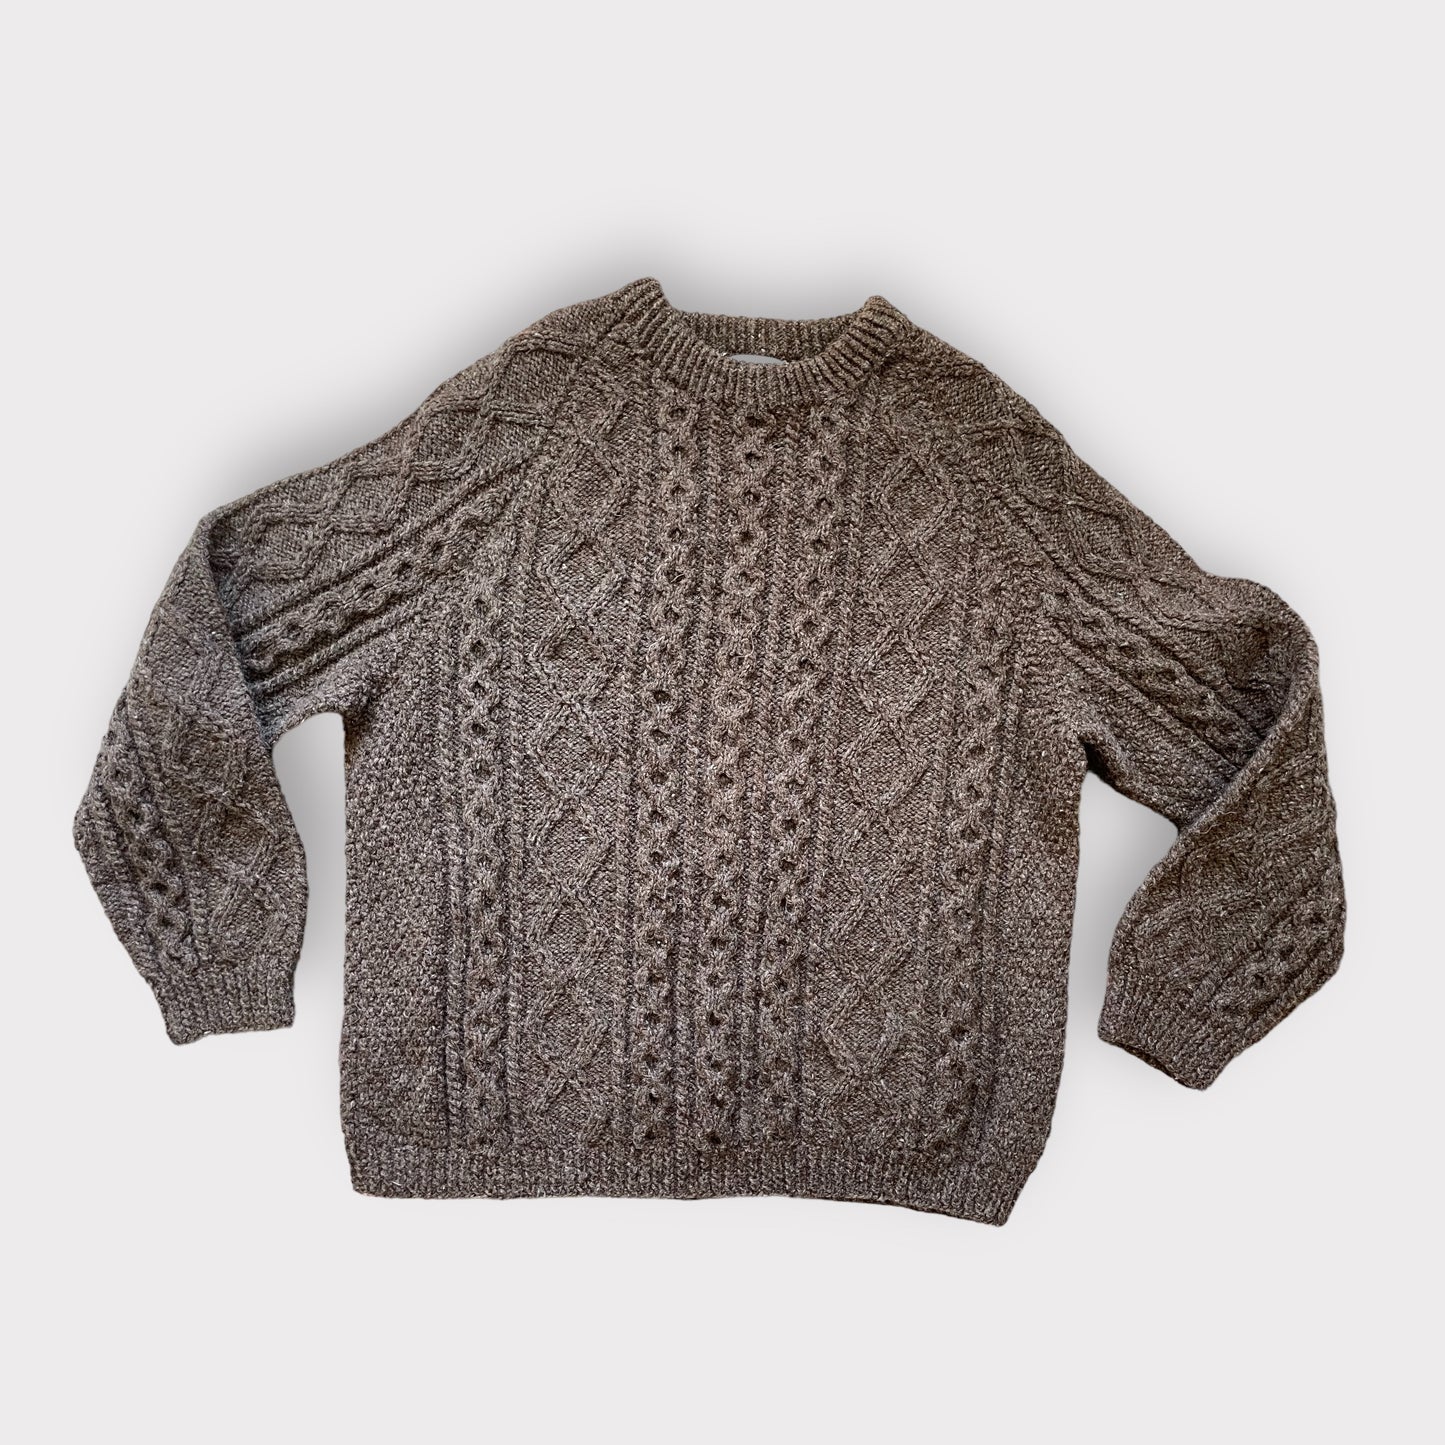 Irish wool sweater, chocolate brown